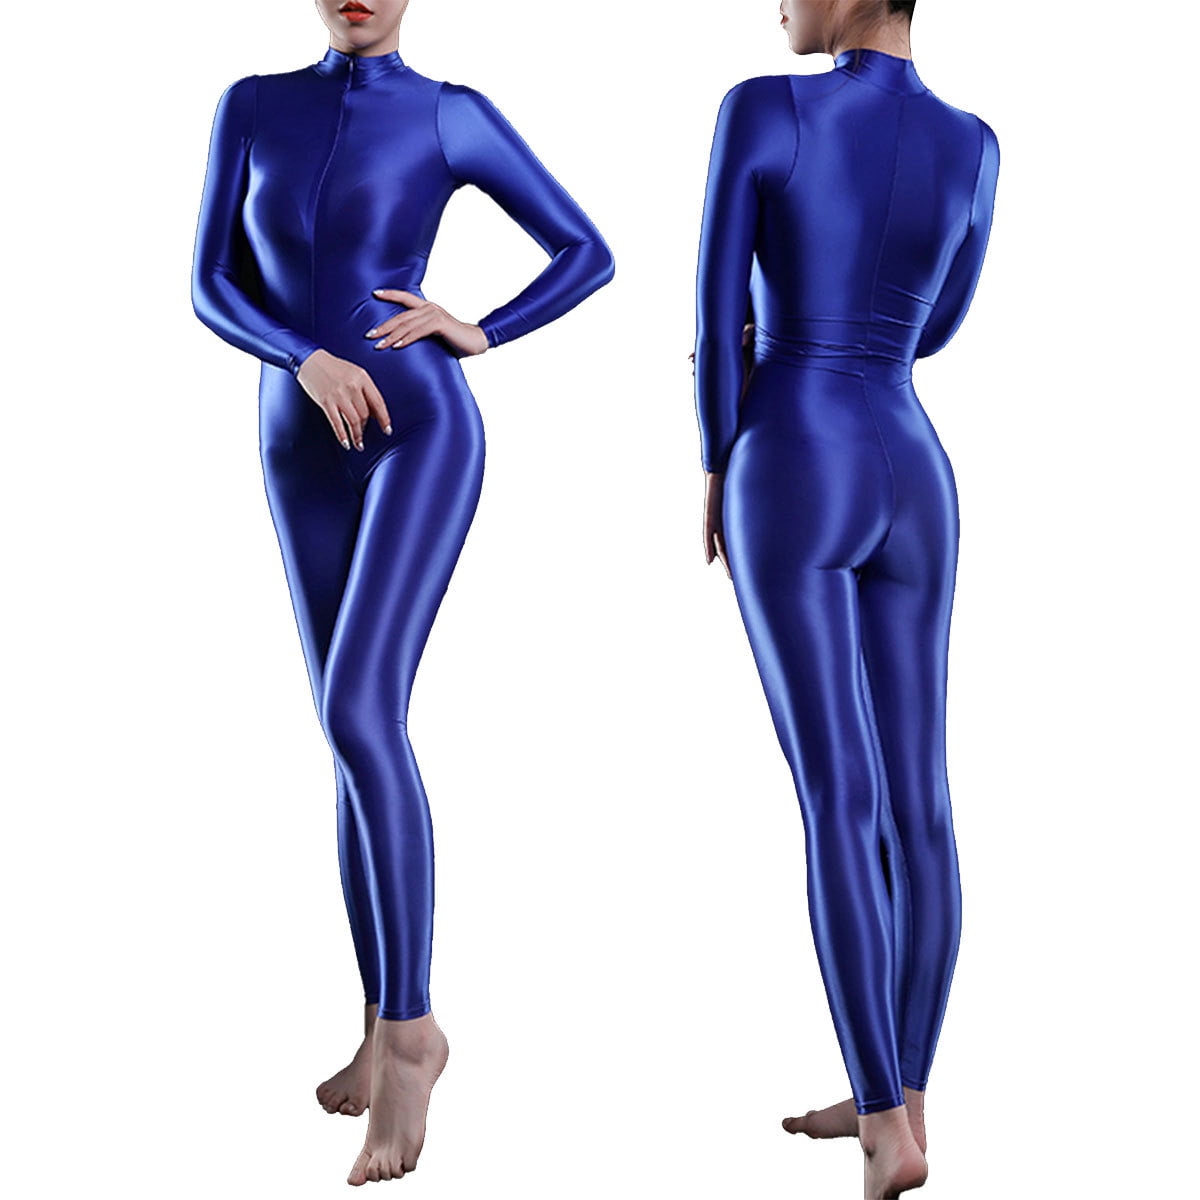 inhzoy Women's Shiny Spandex Unitard High Neck Long Sleeves Ankle Length  Leotard Jumpsuit 